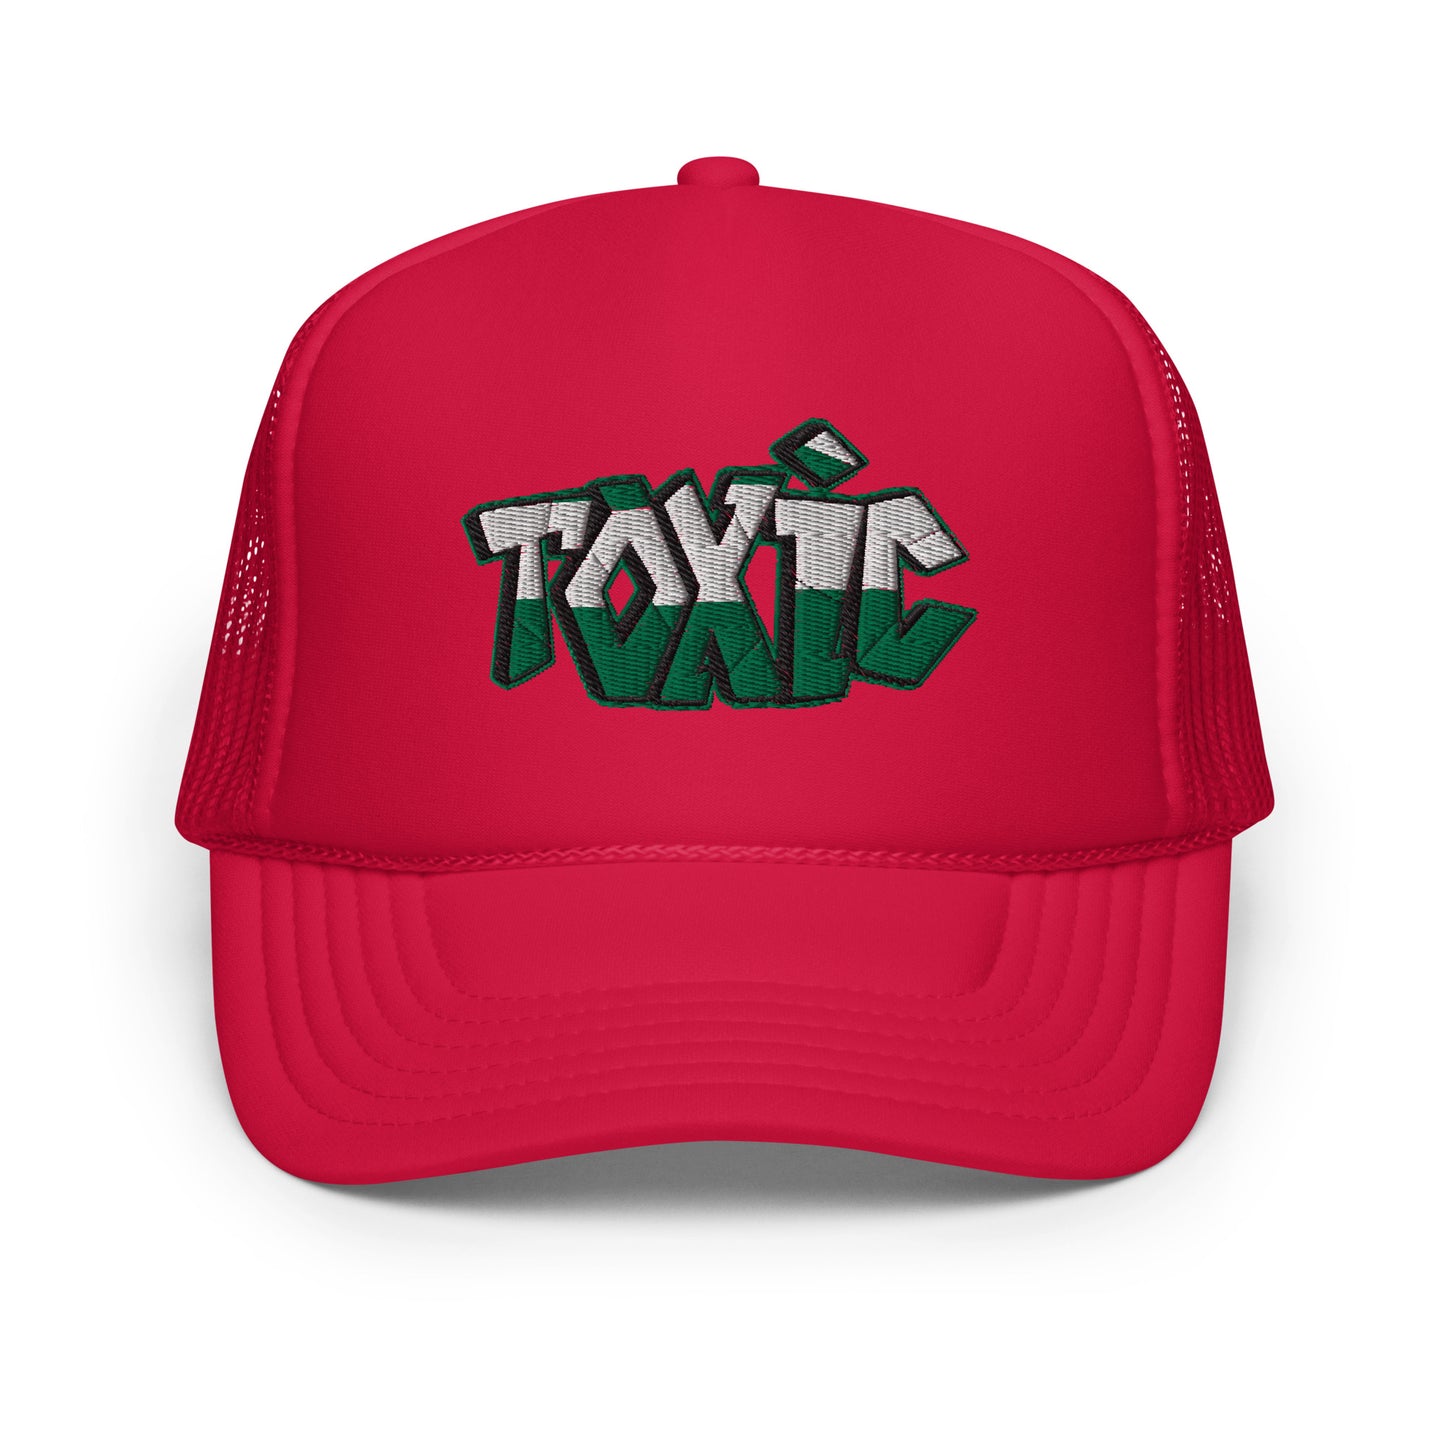 Toxic- Trucker Hat